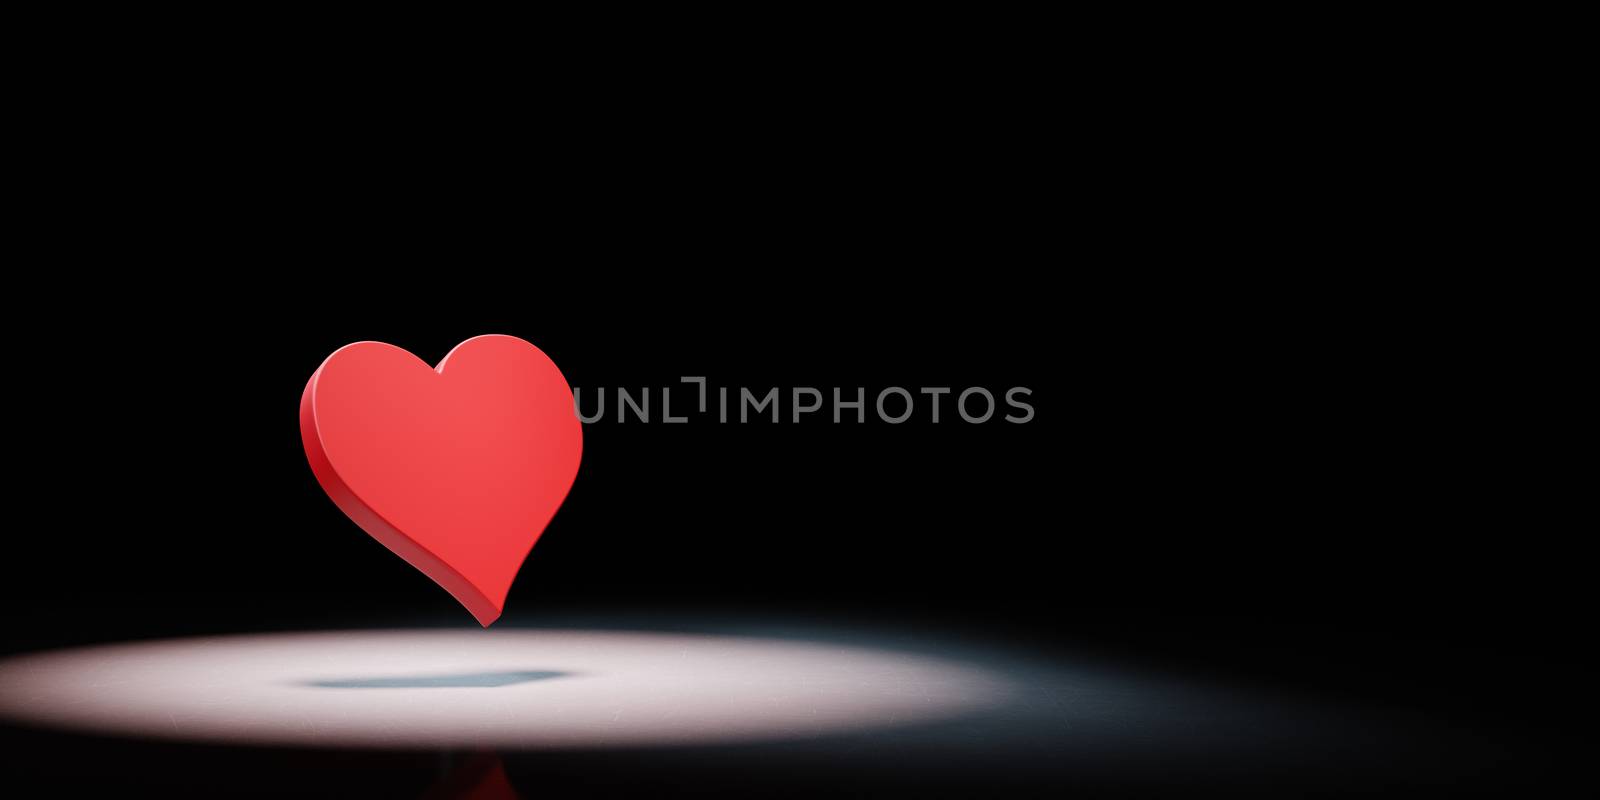 Heart Symbol Shape Spotlighted on Black Background by make